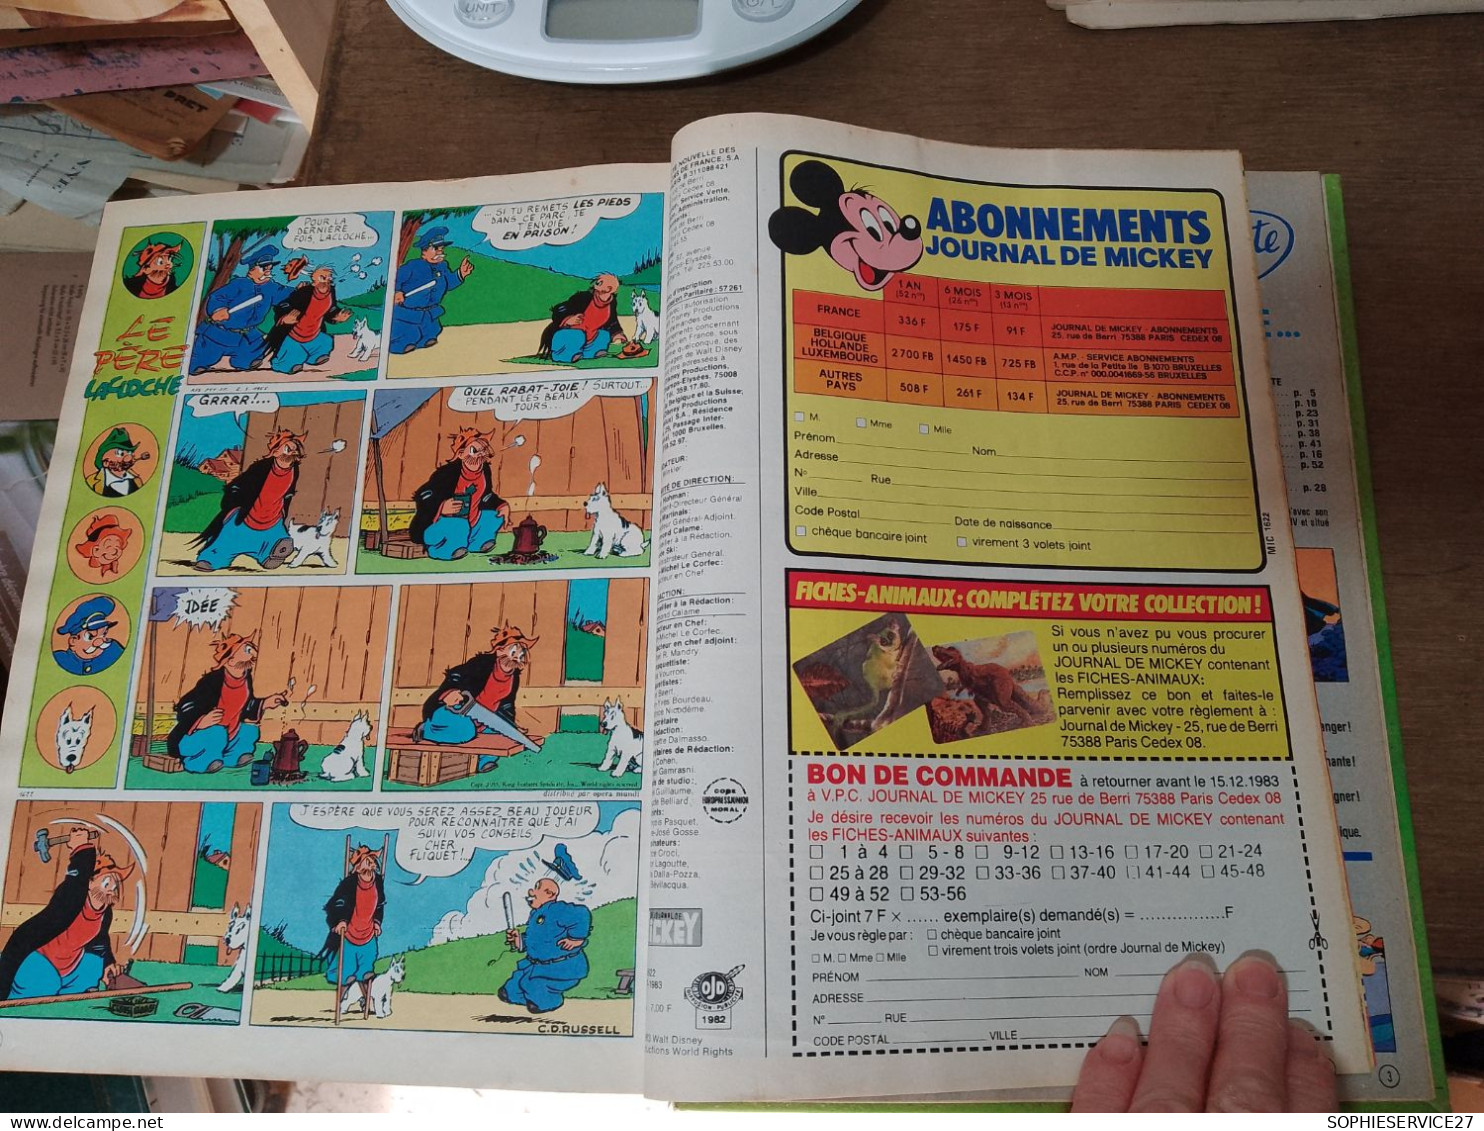 136 //   LE JOURNAL DE MICKEY / ALBUM N° 105  / 1983   56 PAGES - Journal De Mickey